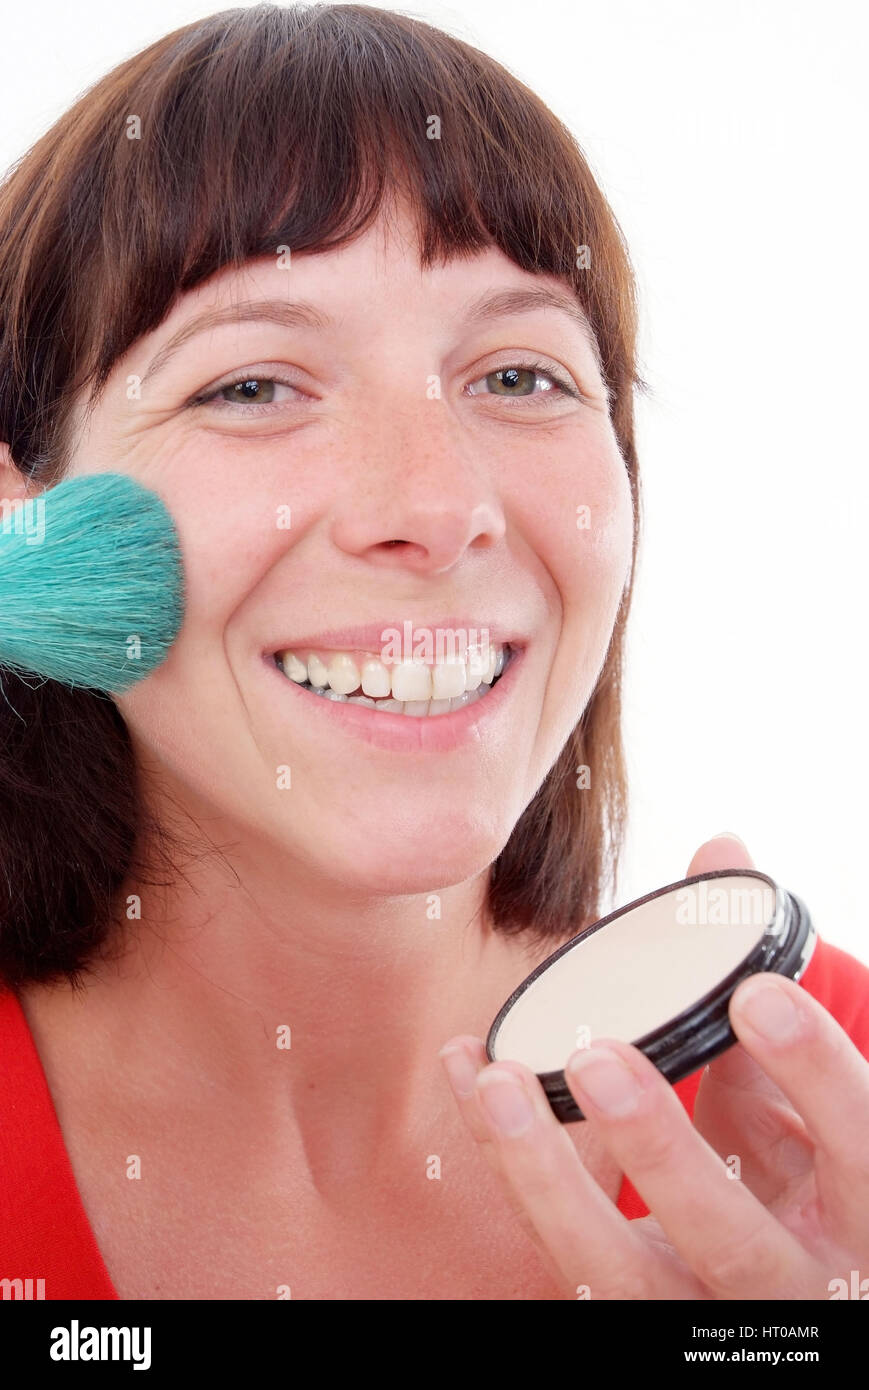 Junge Frau verwendet gesichtspuder - donna prende polvere per il viso Foto Stock